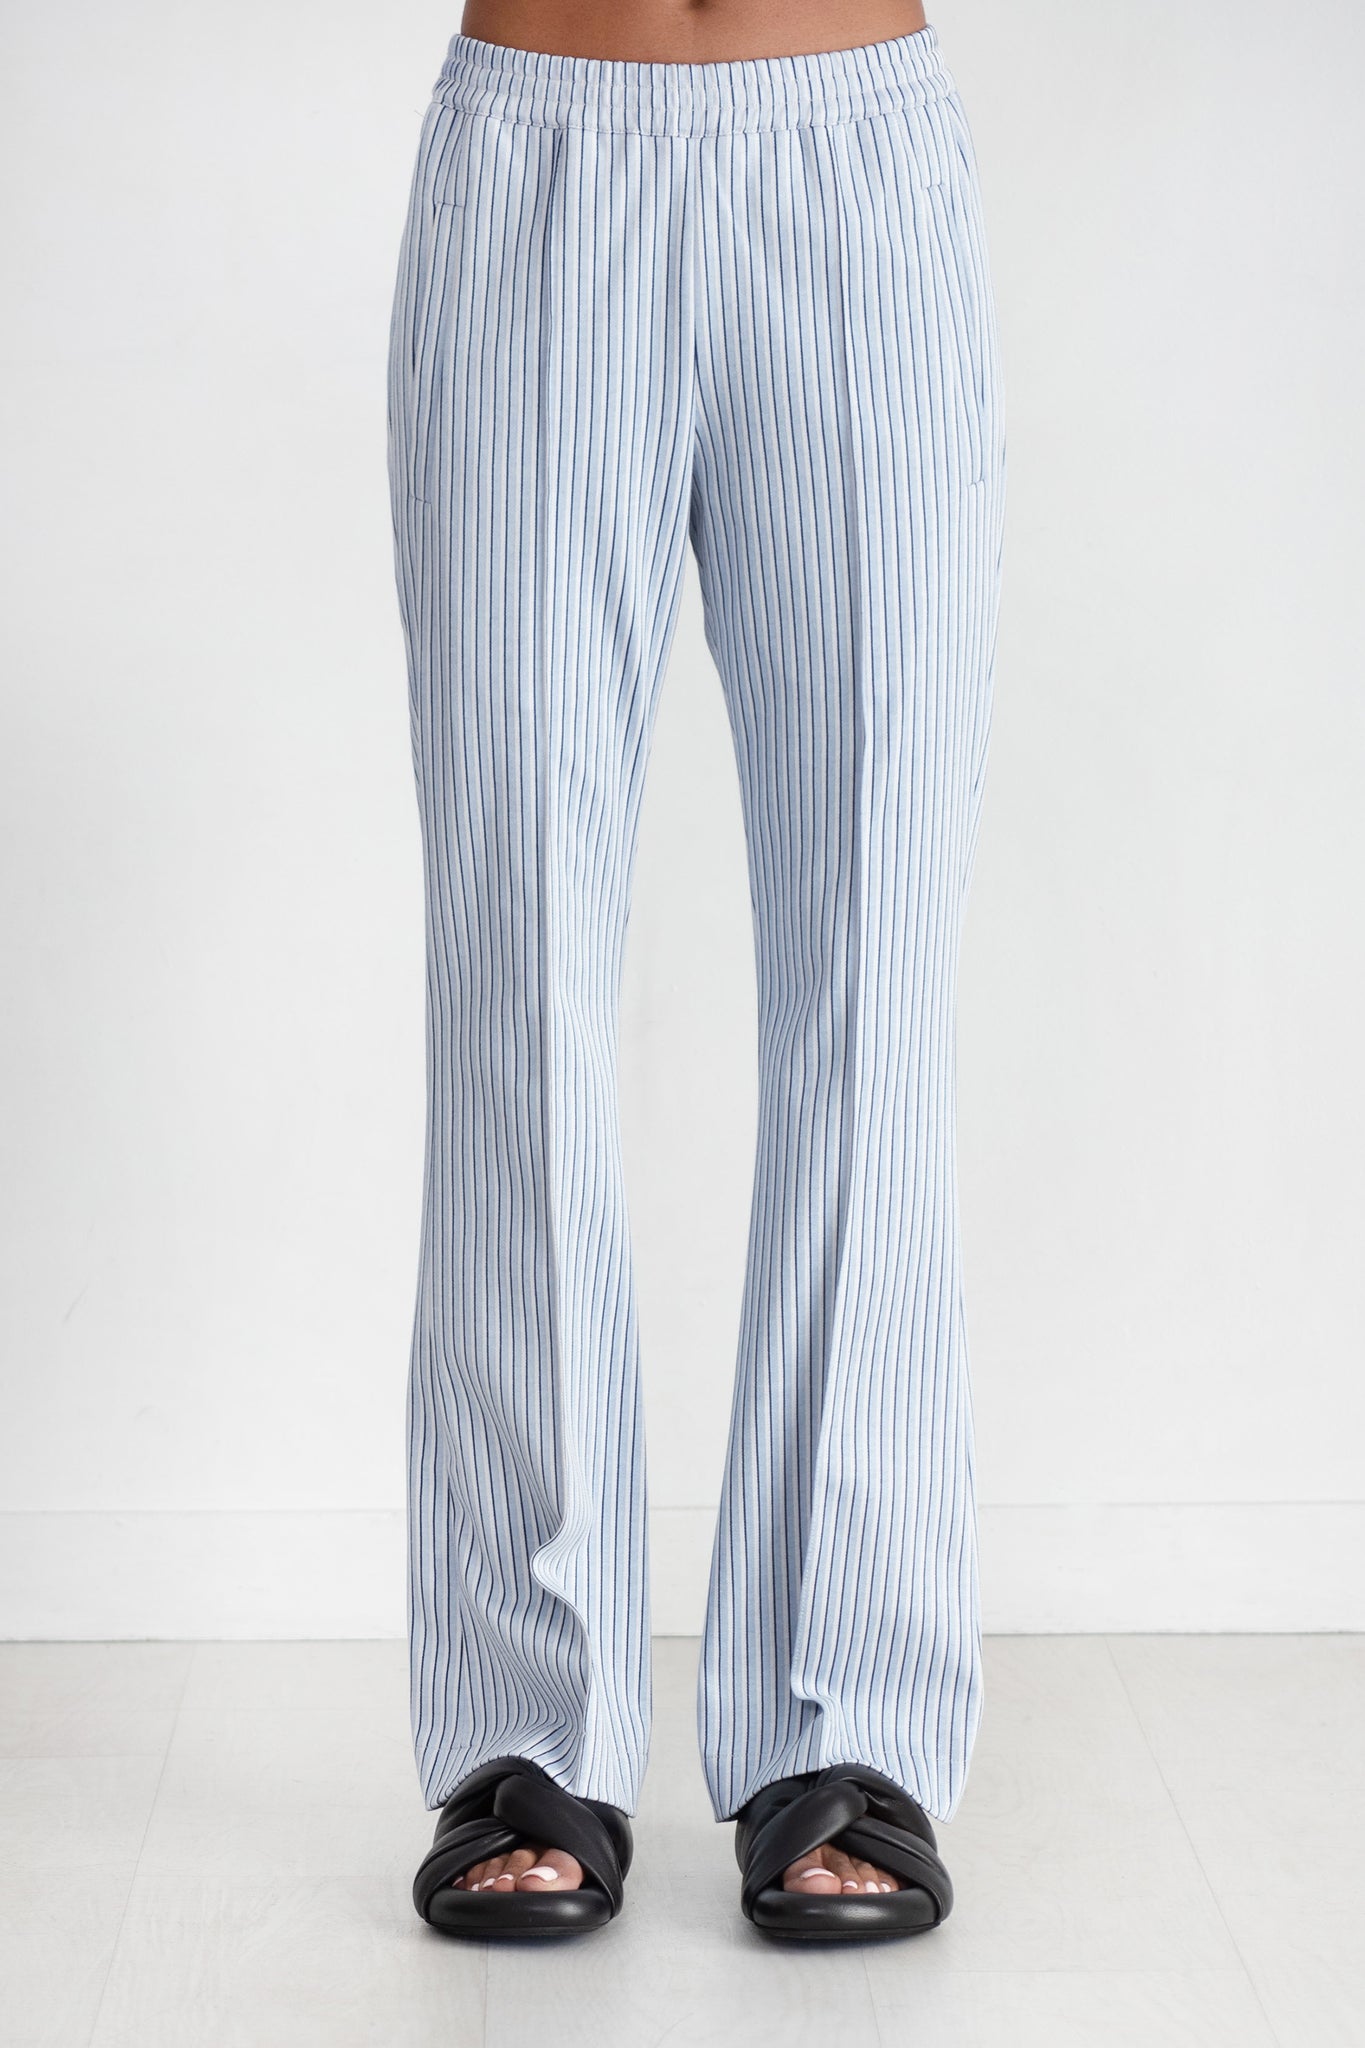 MARNI - Trousers, Vivid Blue